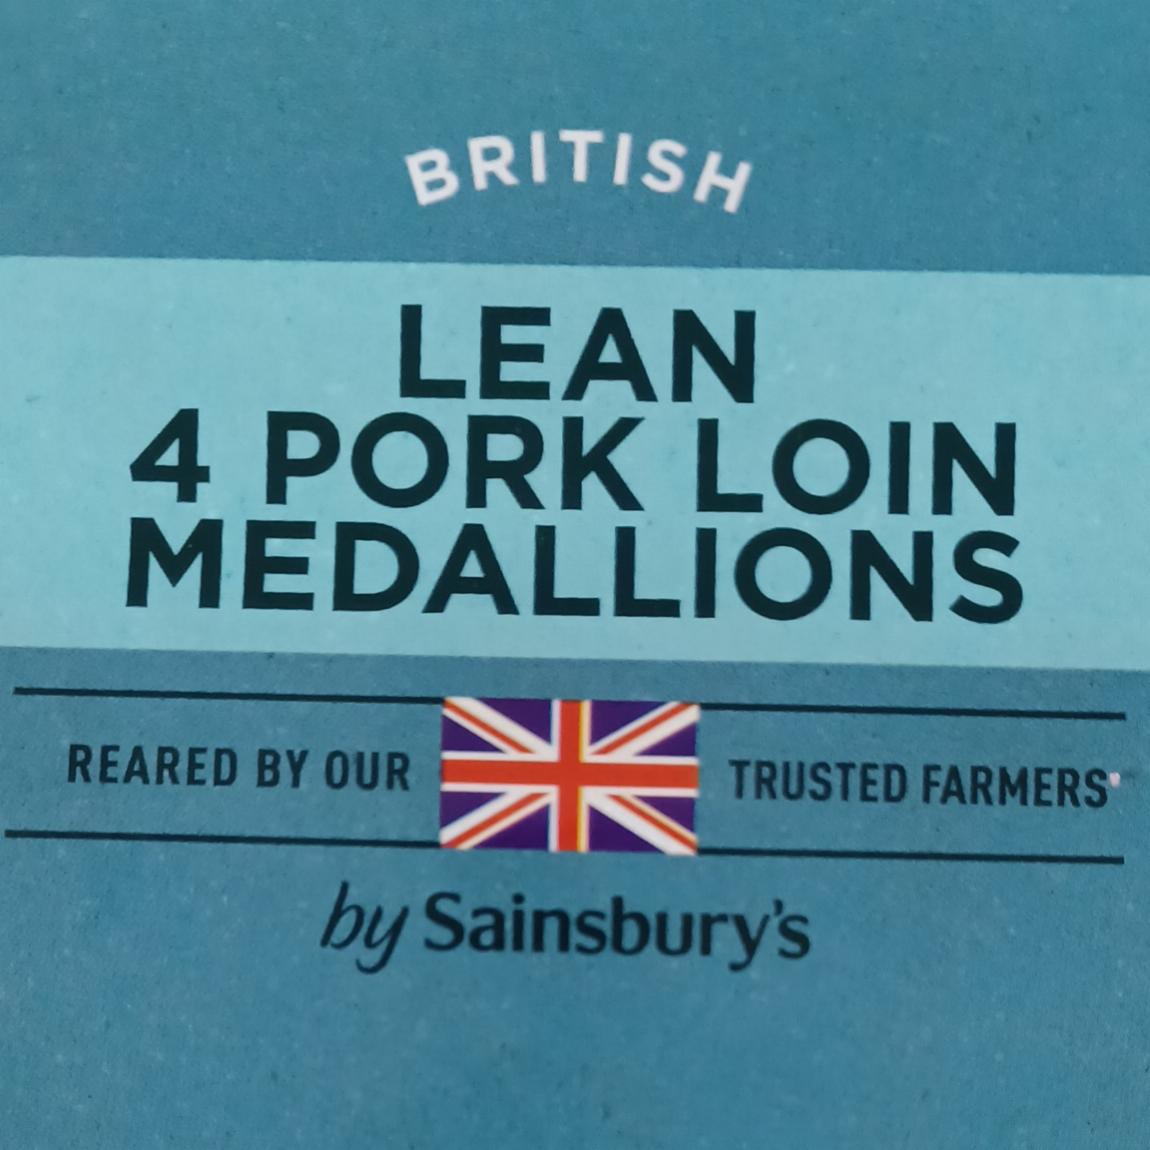 Fotografie - Lean 4 pork loin medallions by Sainsbury's